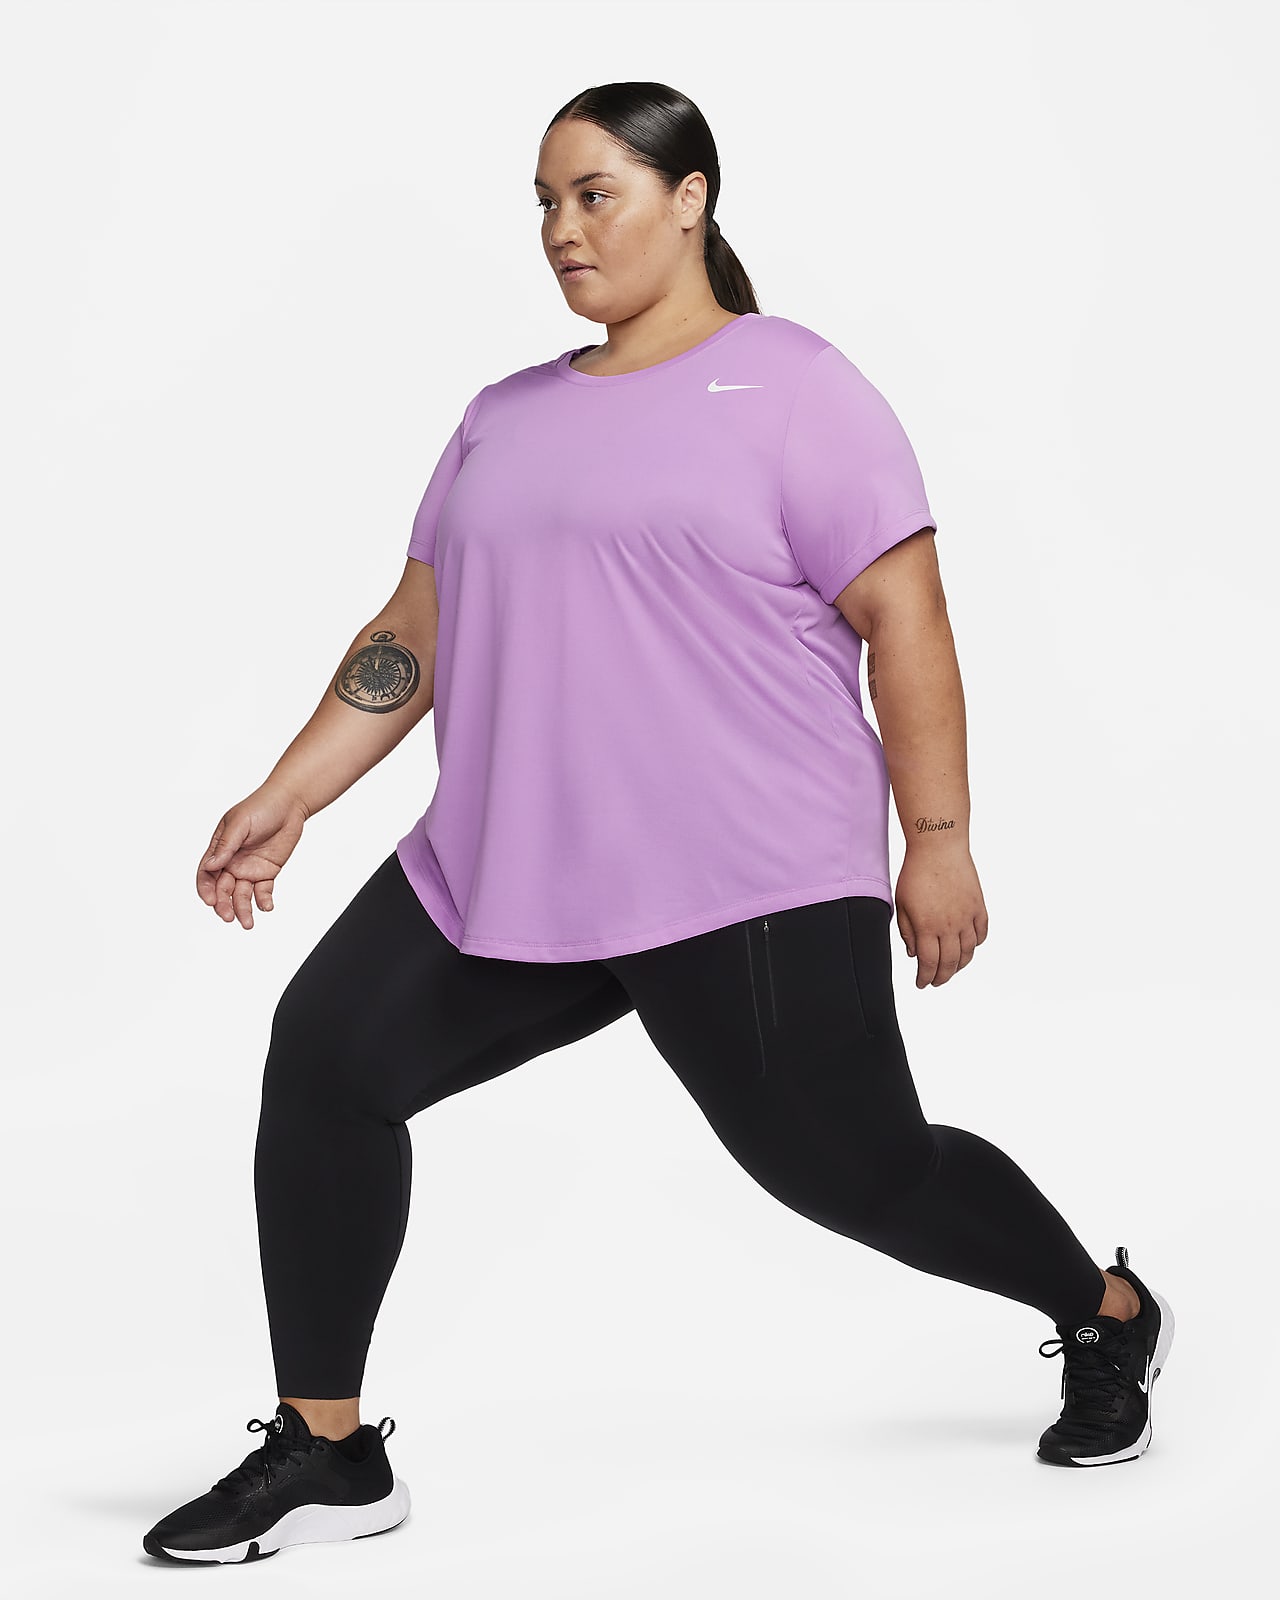 Nike Women's T-Shirt (Plus Size).